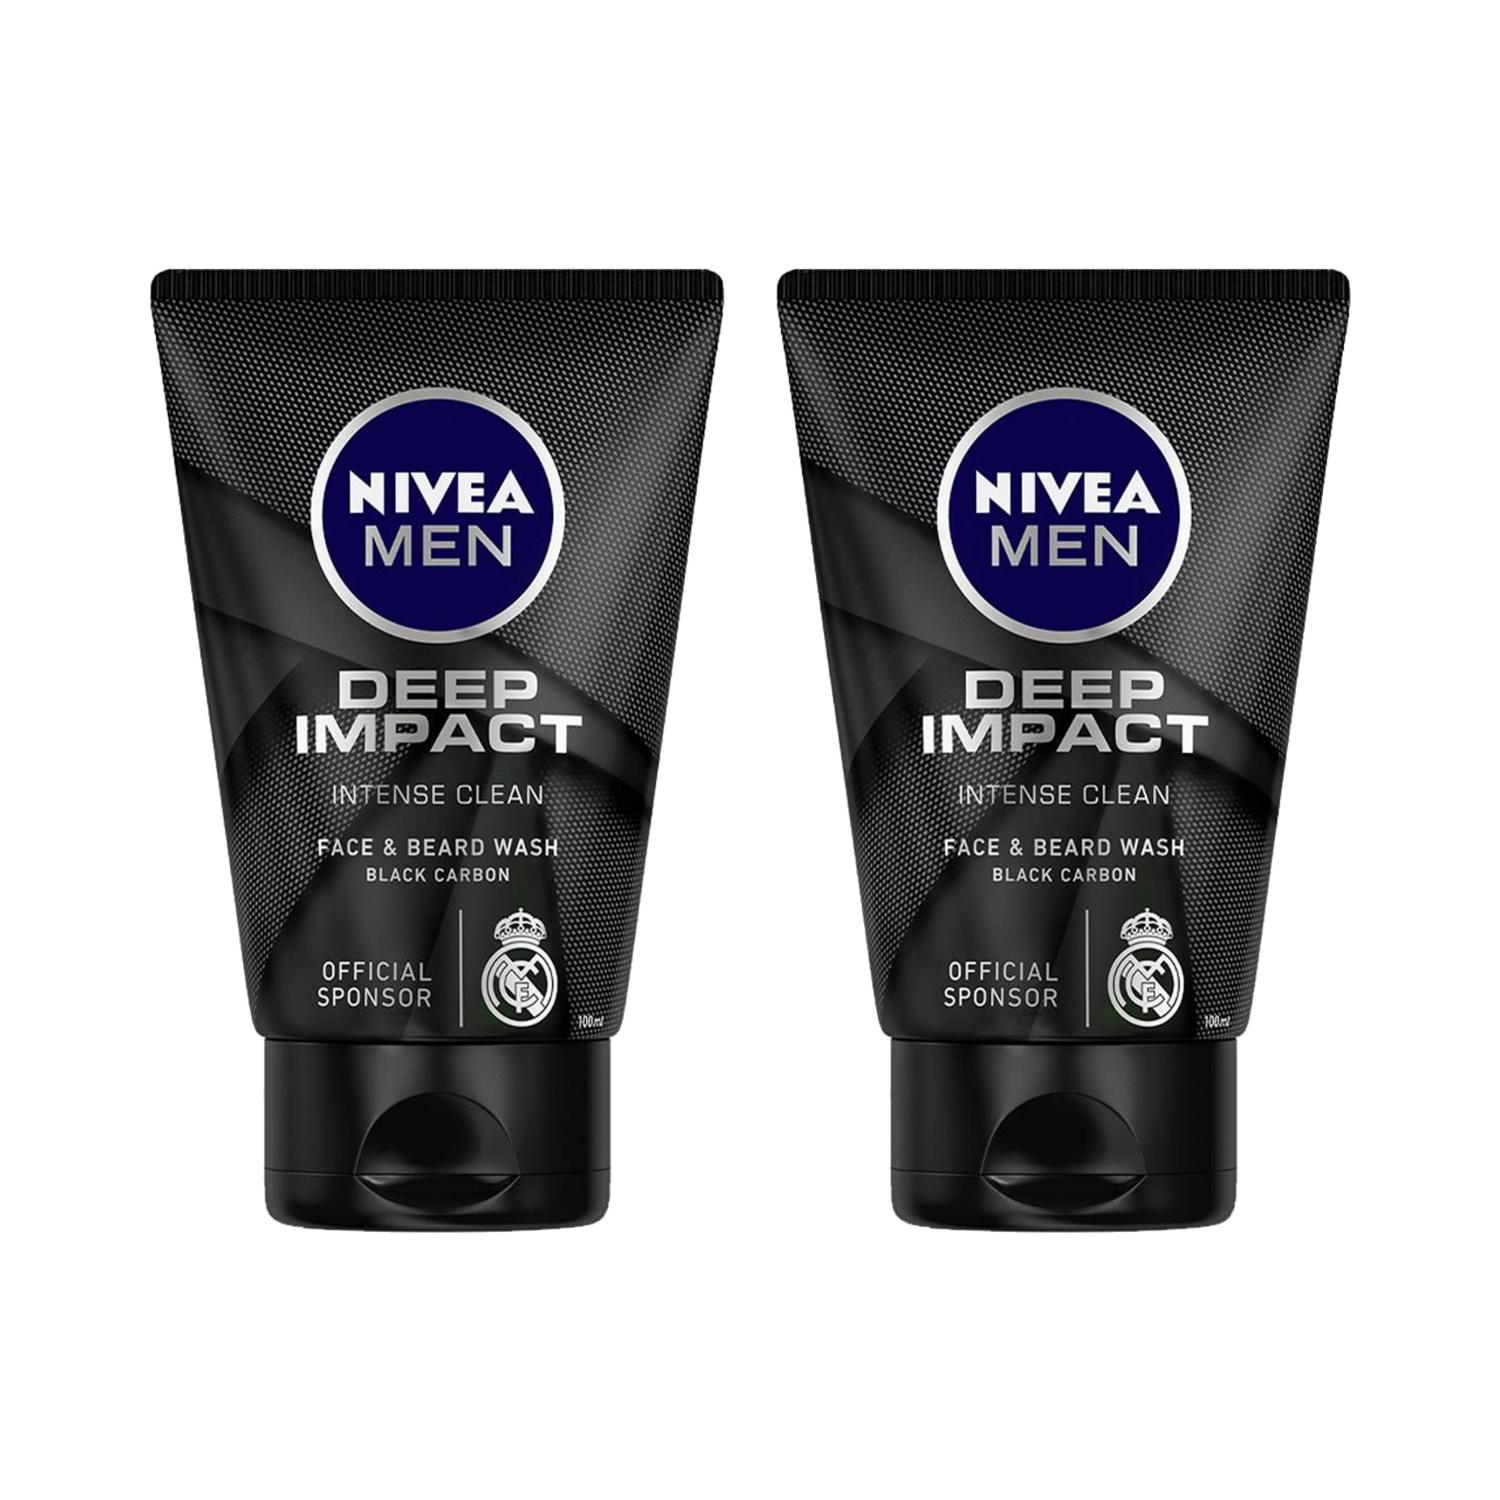 Nivea | Nivea Men Deep Impact Face & Beard Wash - Intense Clean (100 g) (Pack Of 2) Combo